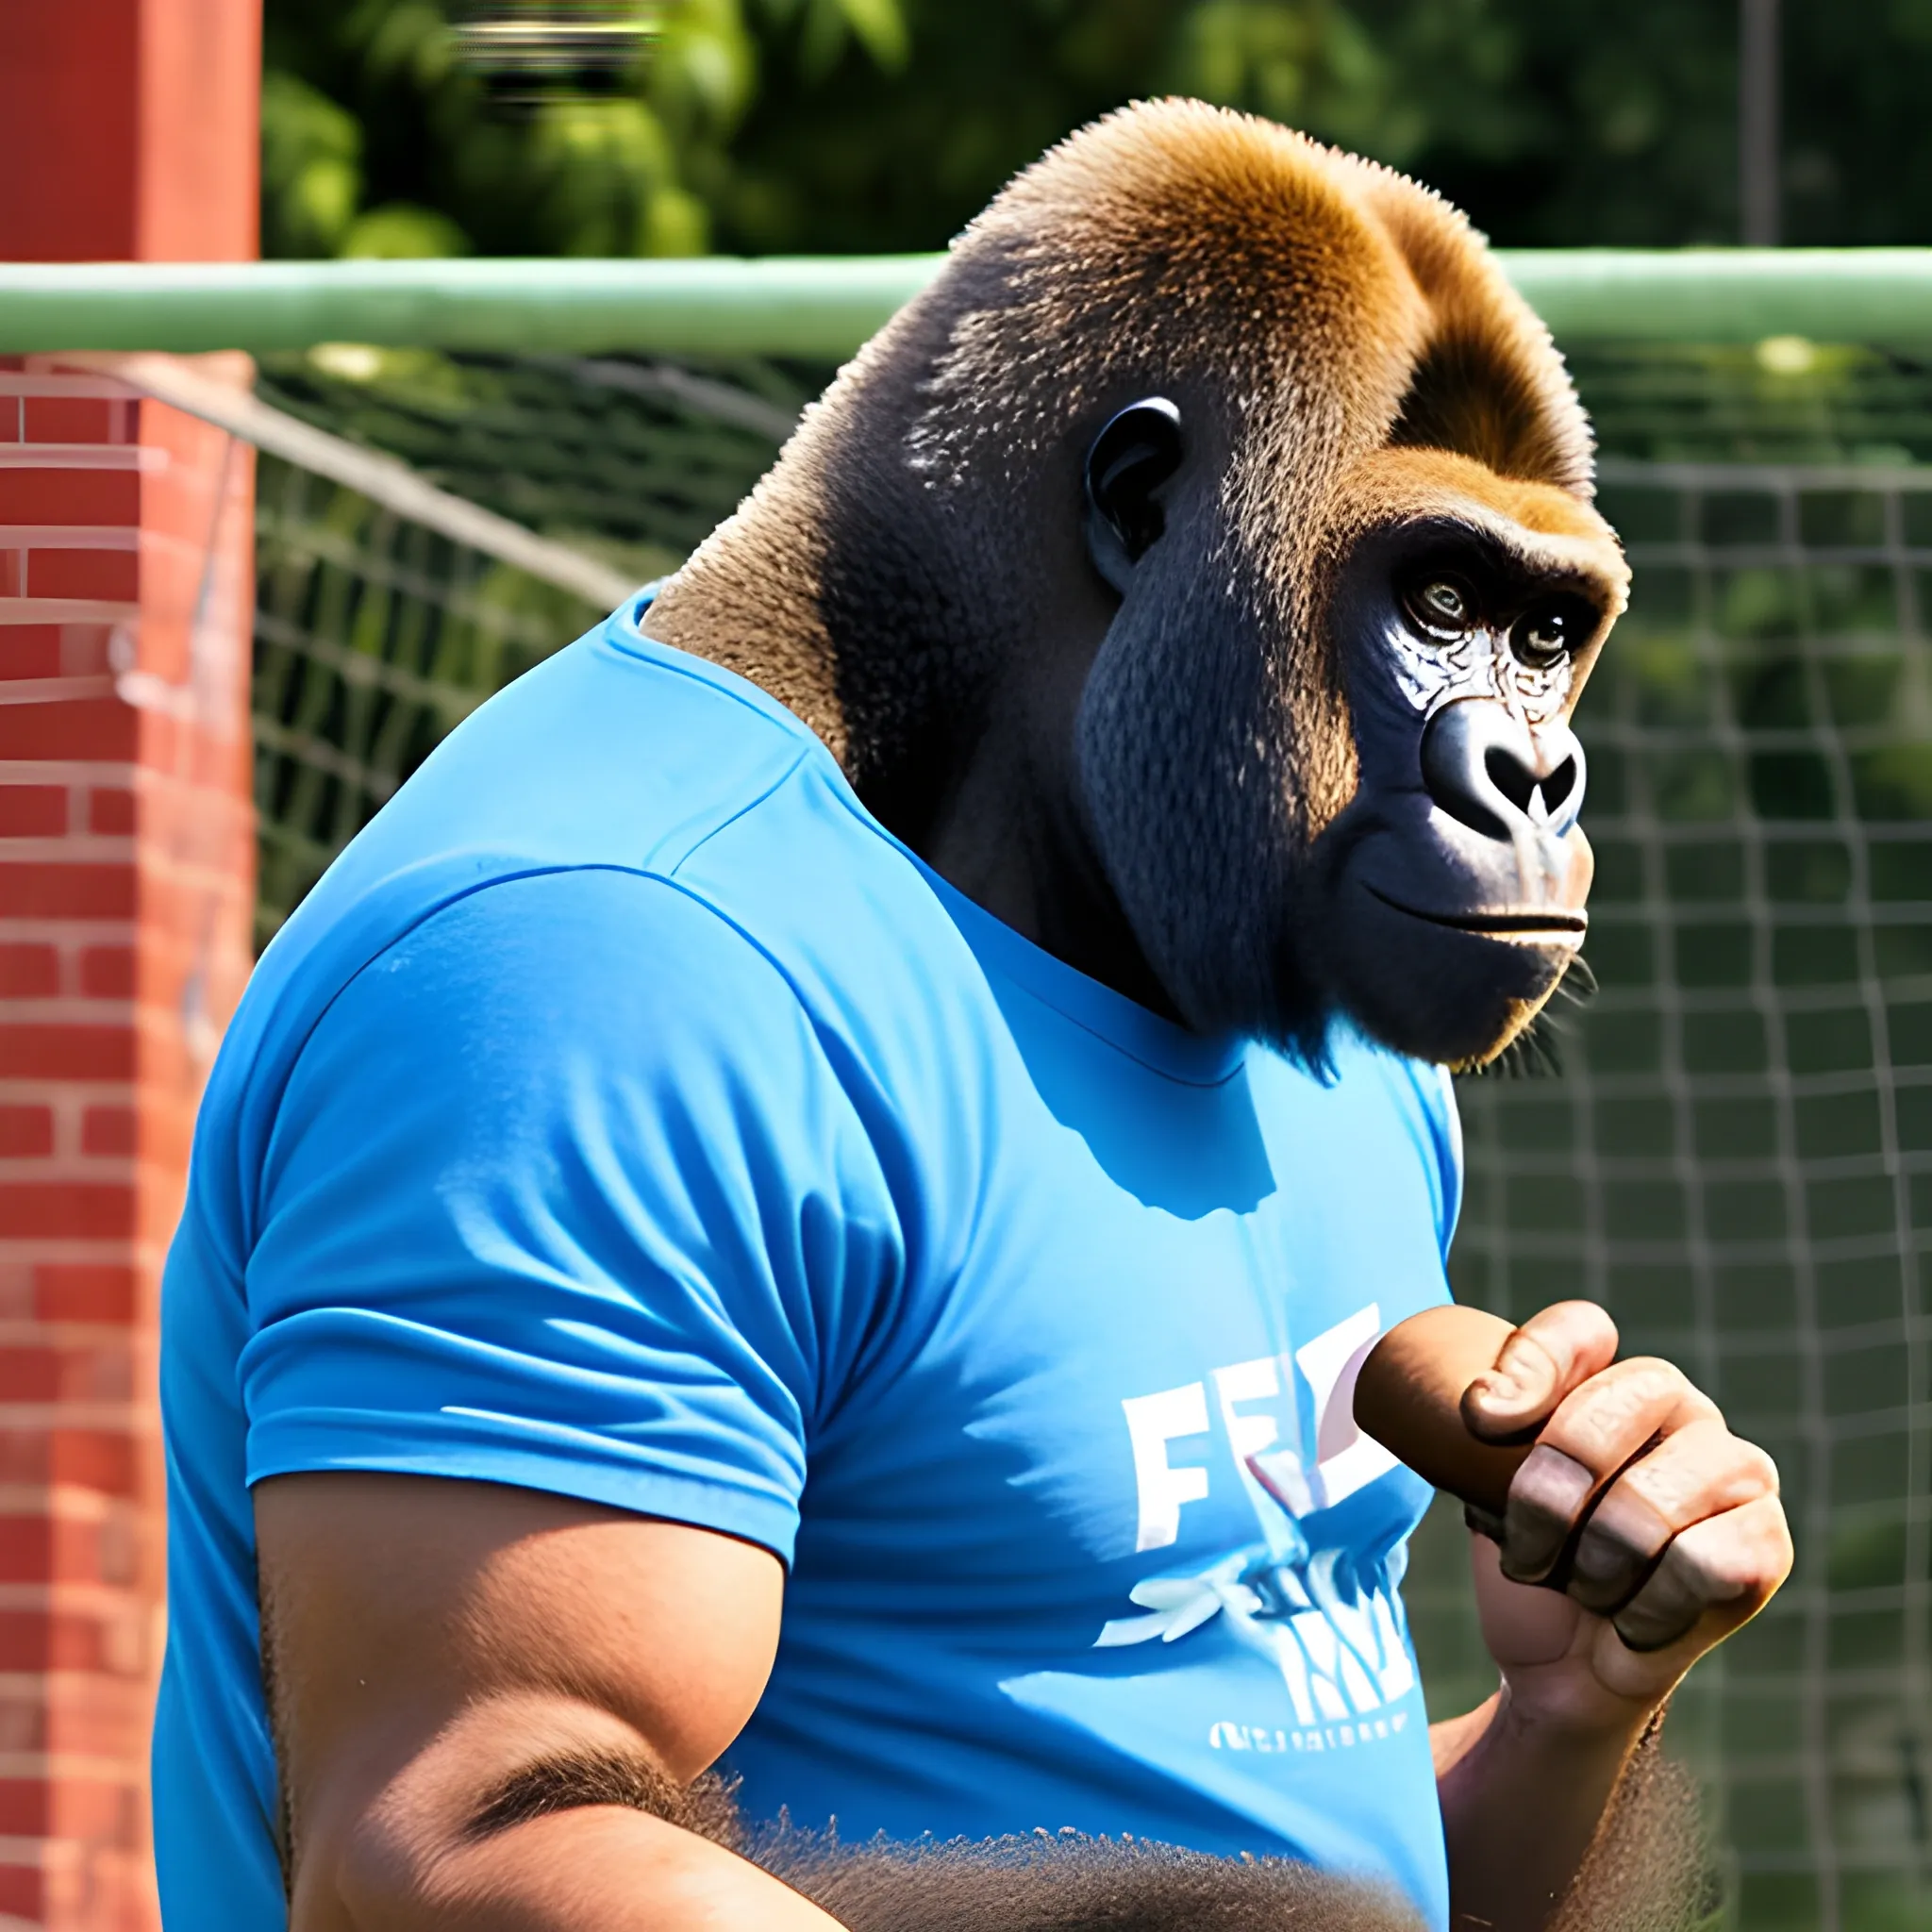 gorilla playing handball, smoking cigar, shorte azul, Blue shirt with "FEA" written on it